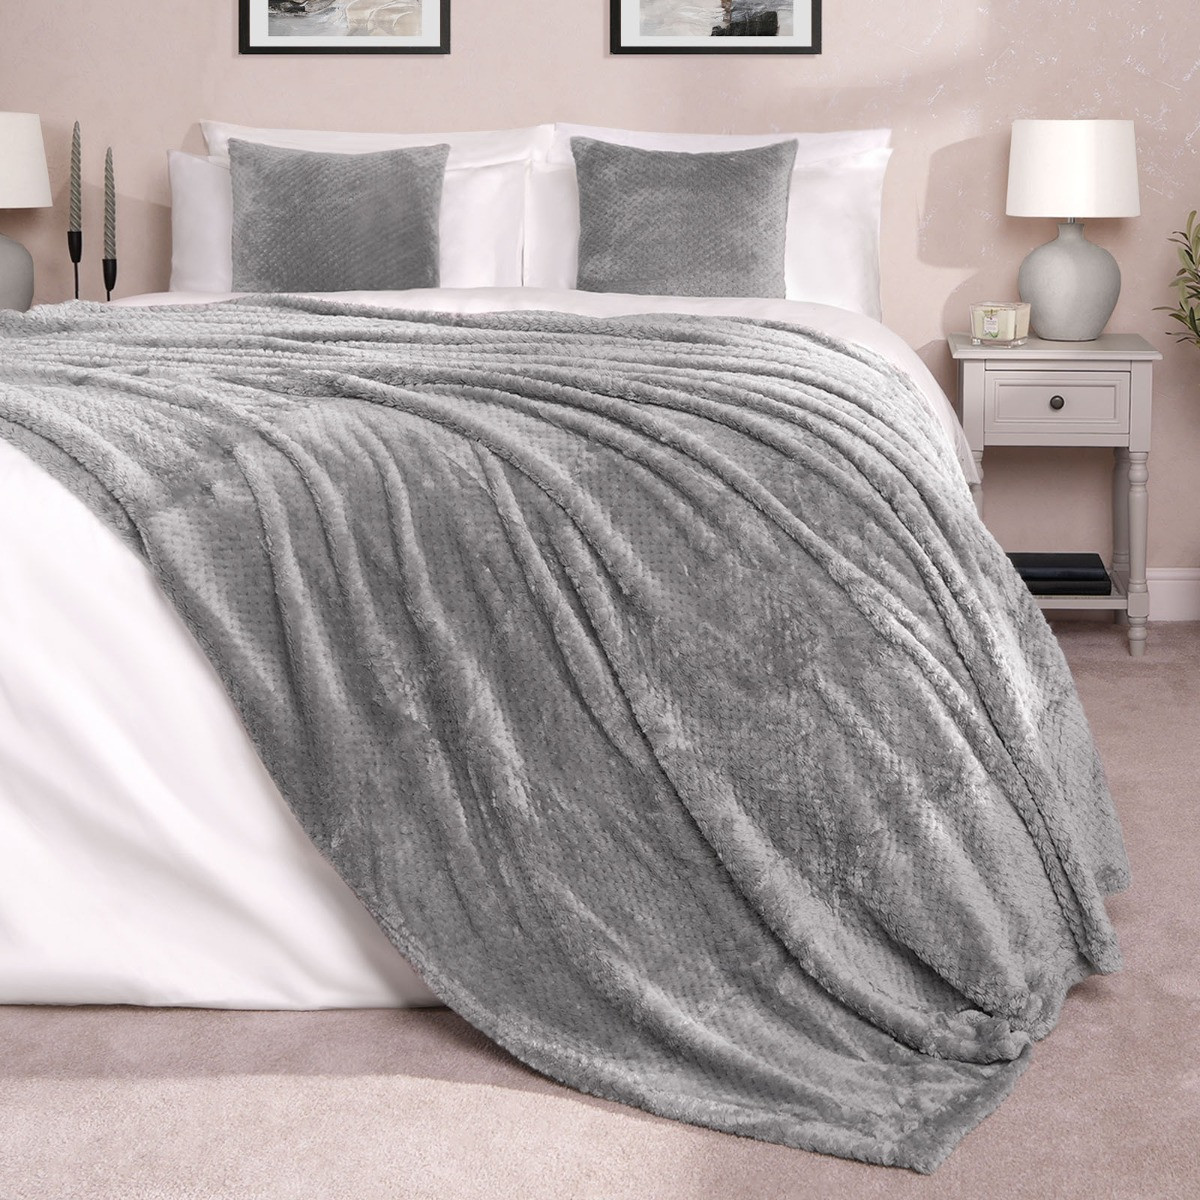 Luxury Waffle Mink Warm Throw Over Sofa Bed Soft Blanket 125 x 150cm Charcoal>